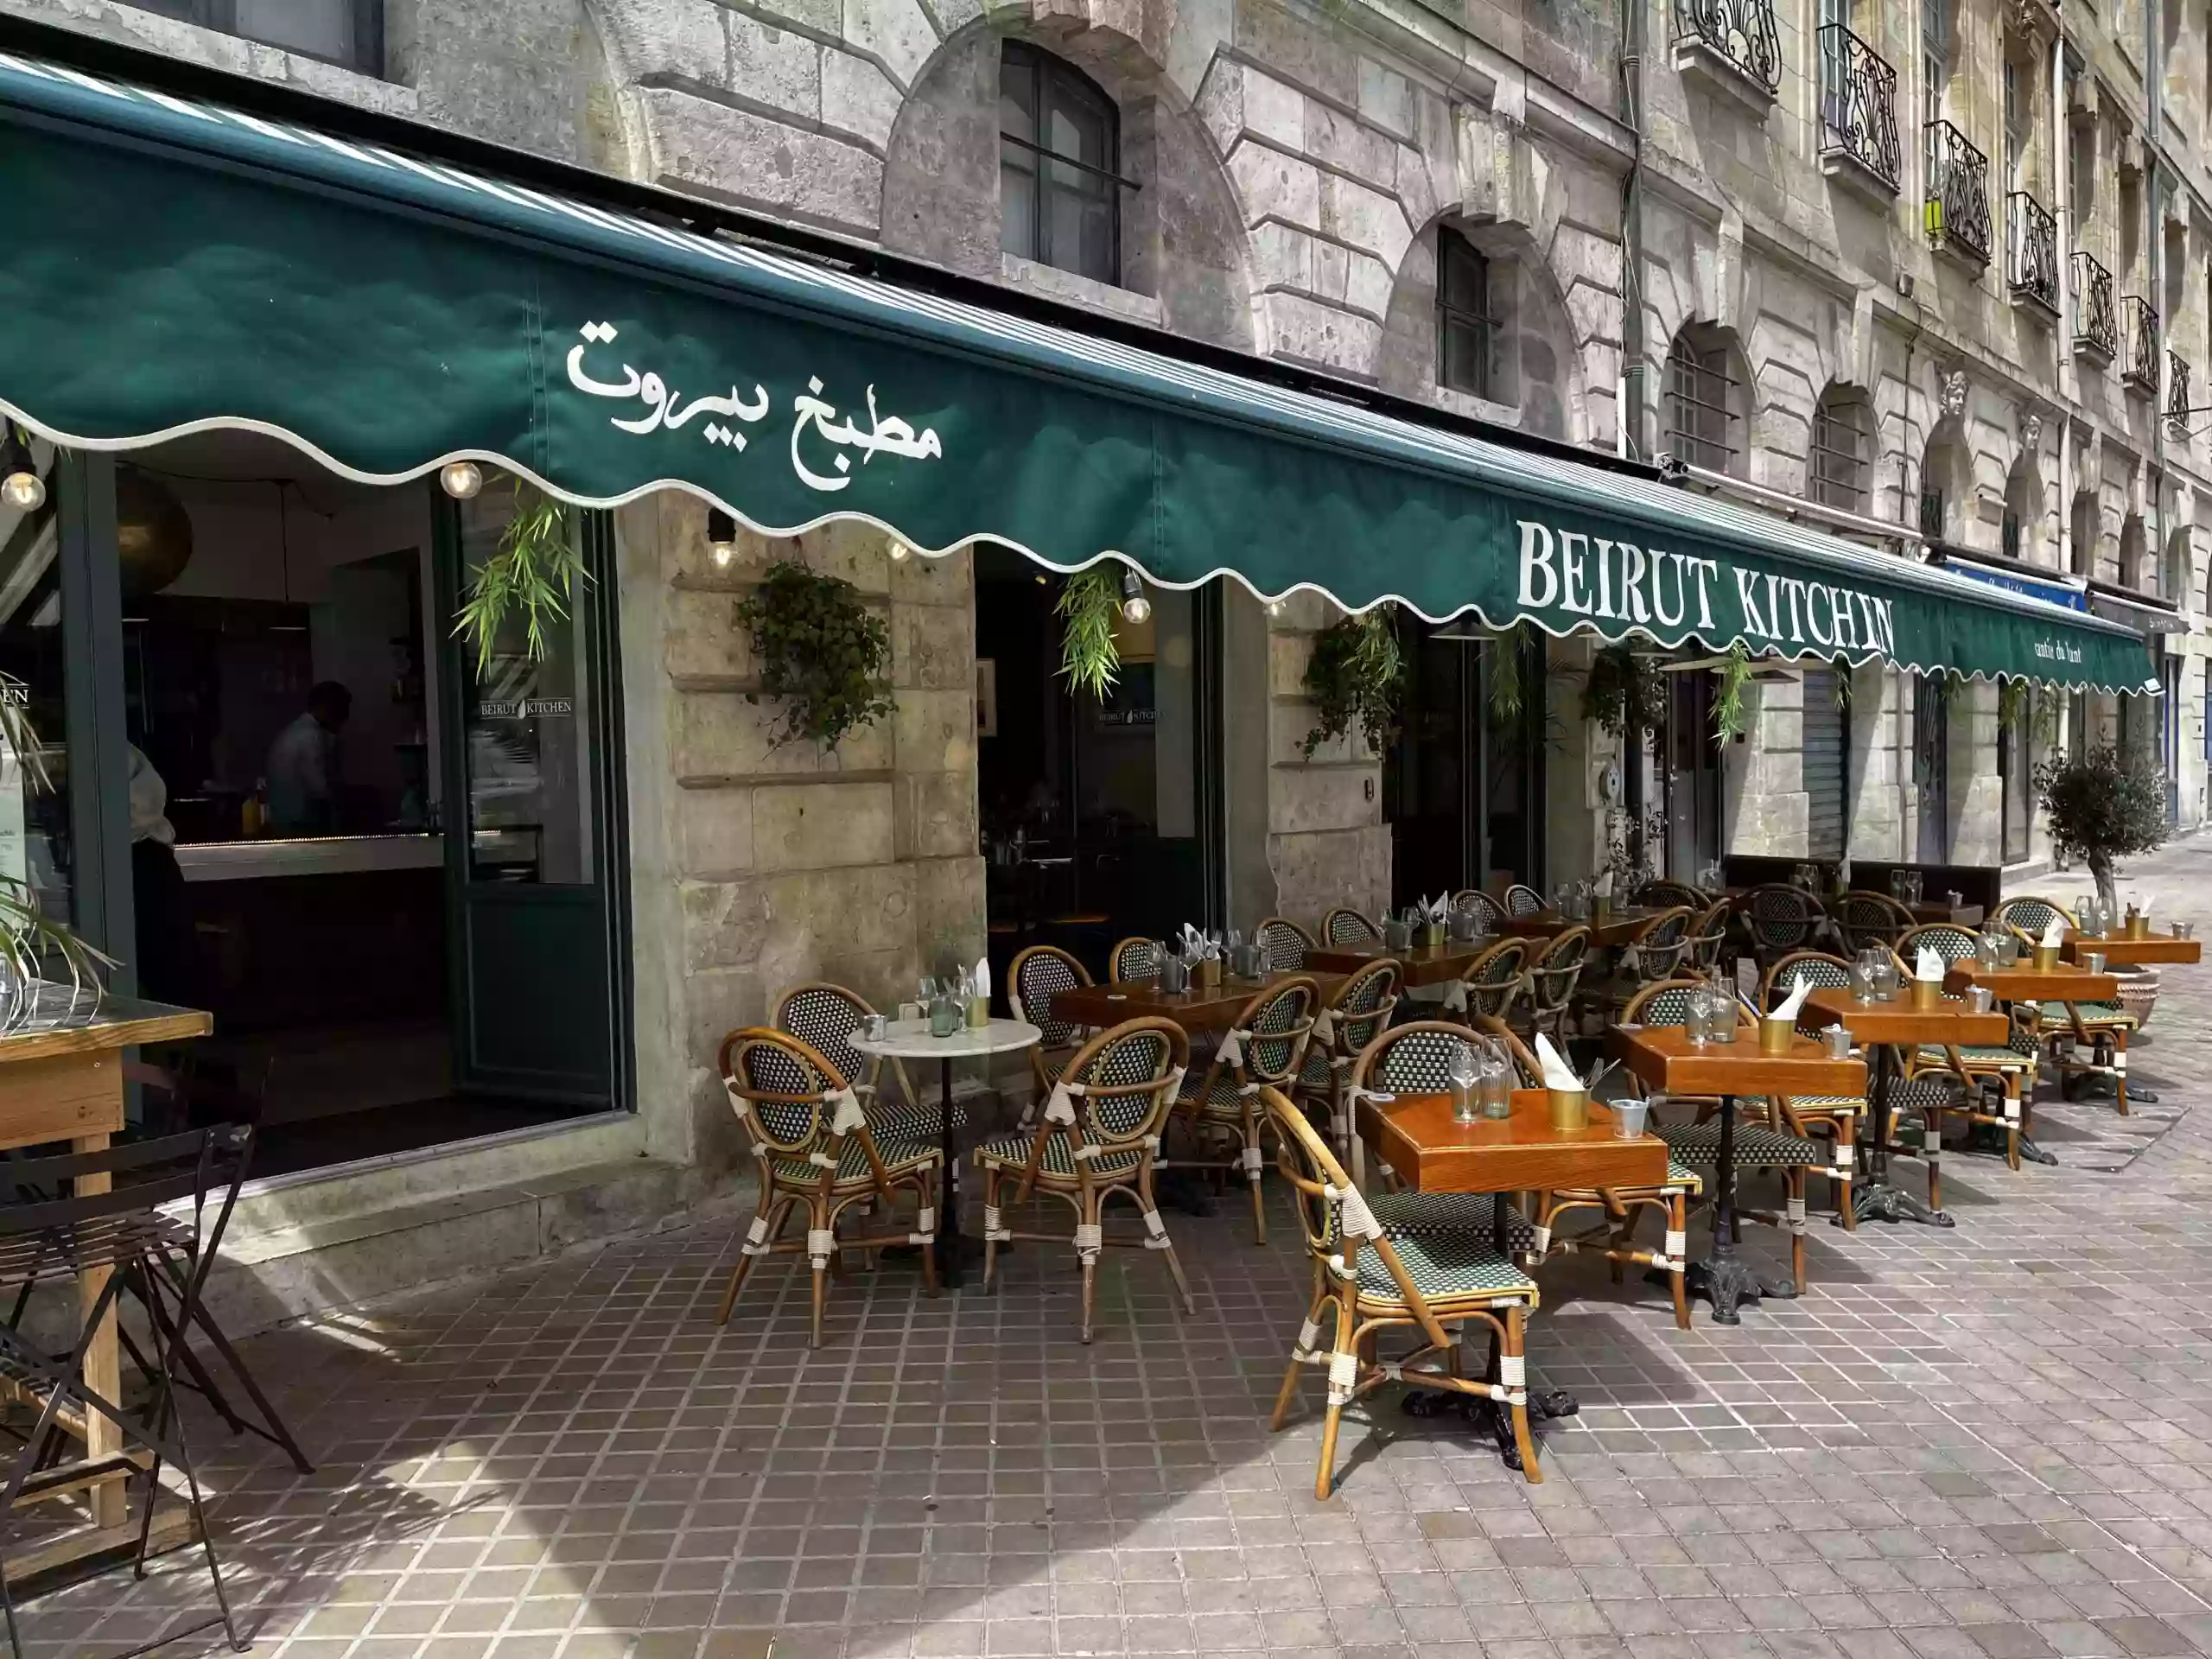 Beirut Kitchen - Cantine du levant